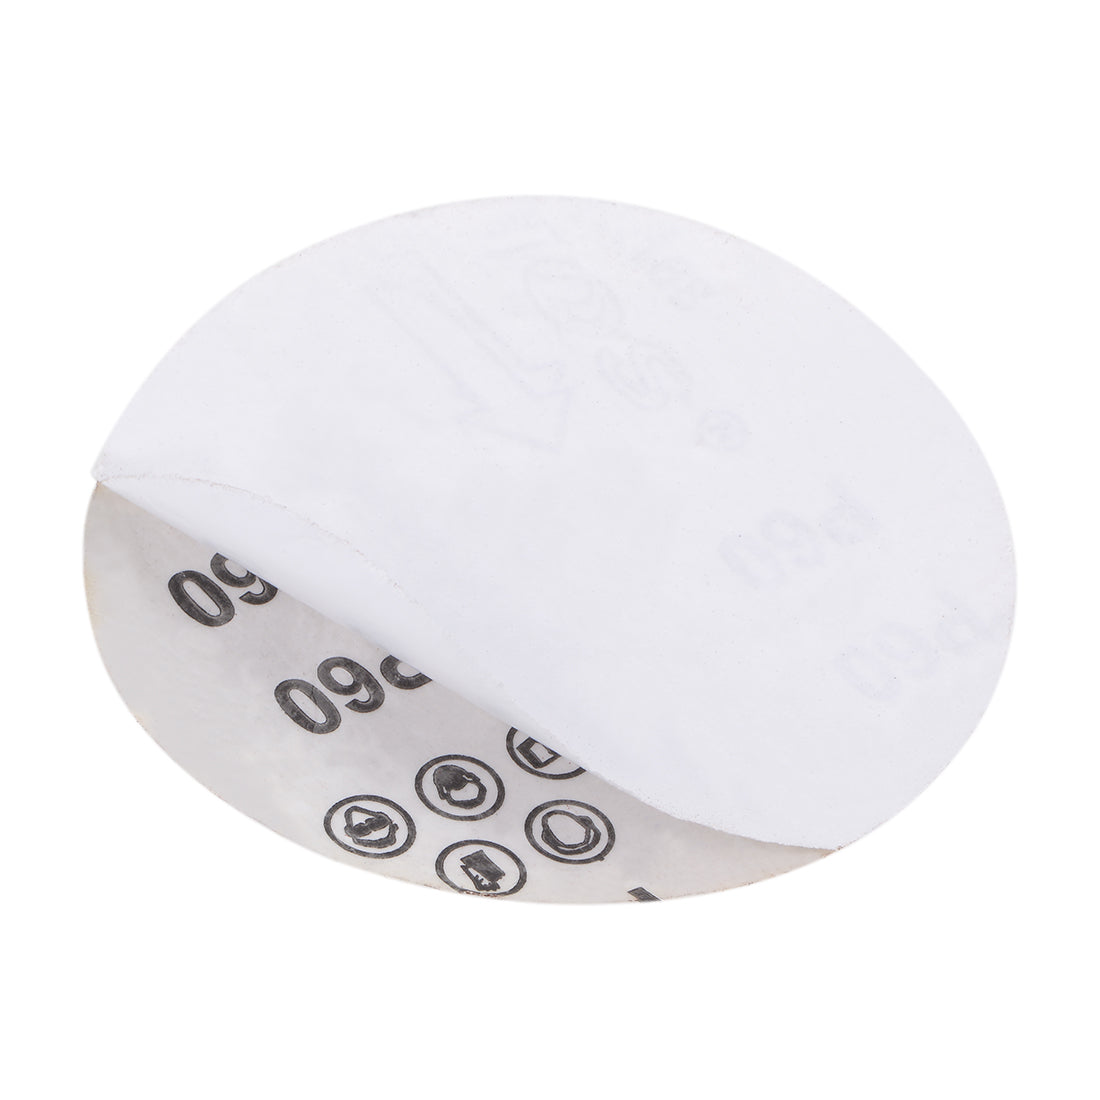 uxcell Uxcell 5-Inch PSA Sanding Disc Aluminum Oxide Adhesive Back Sandpaper 60 Grit 15 Pcs